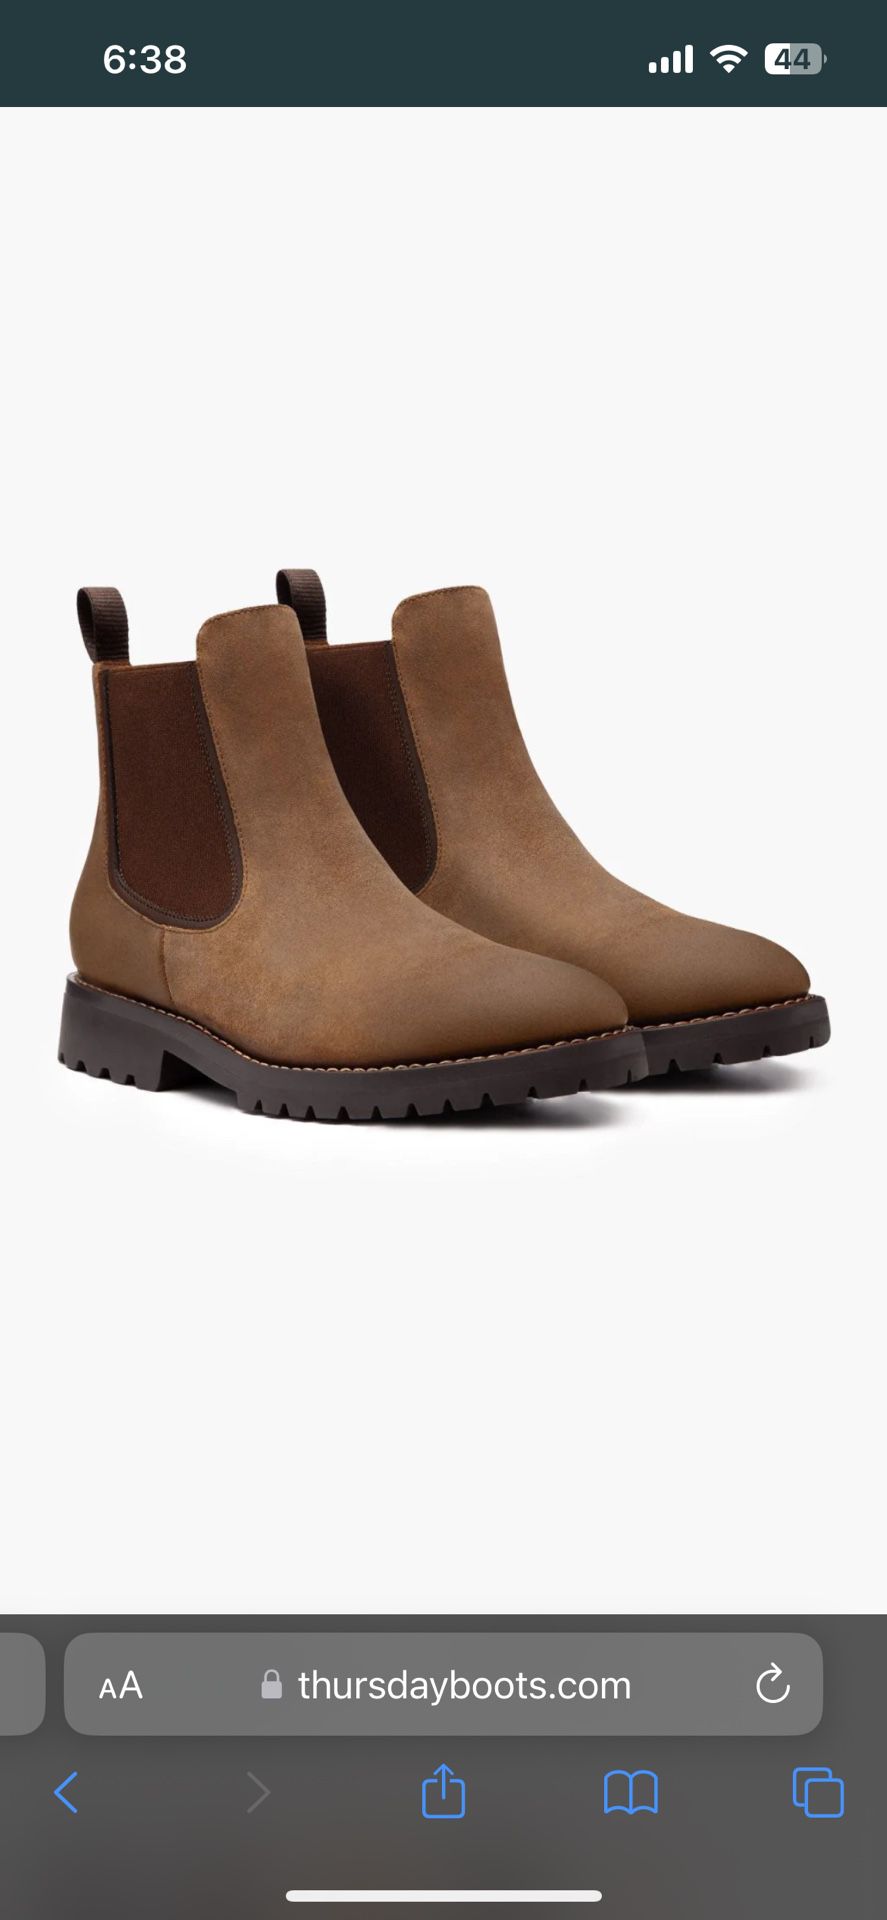 Thursday Boots Size 9 $120